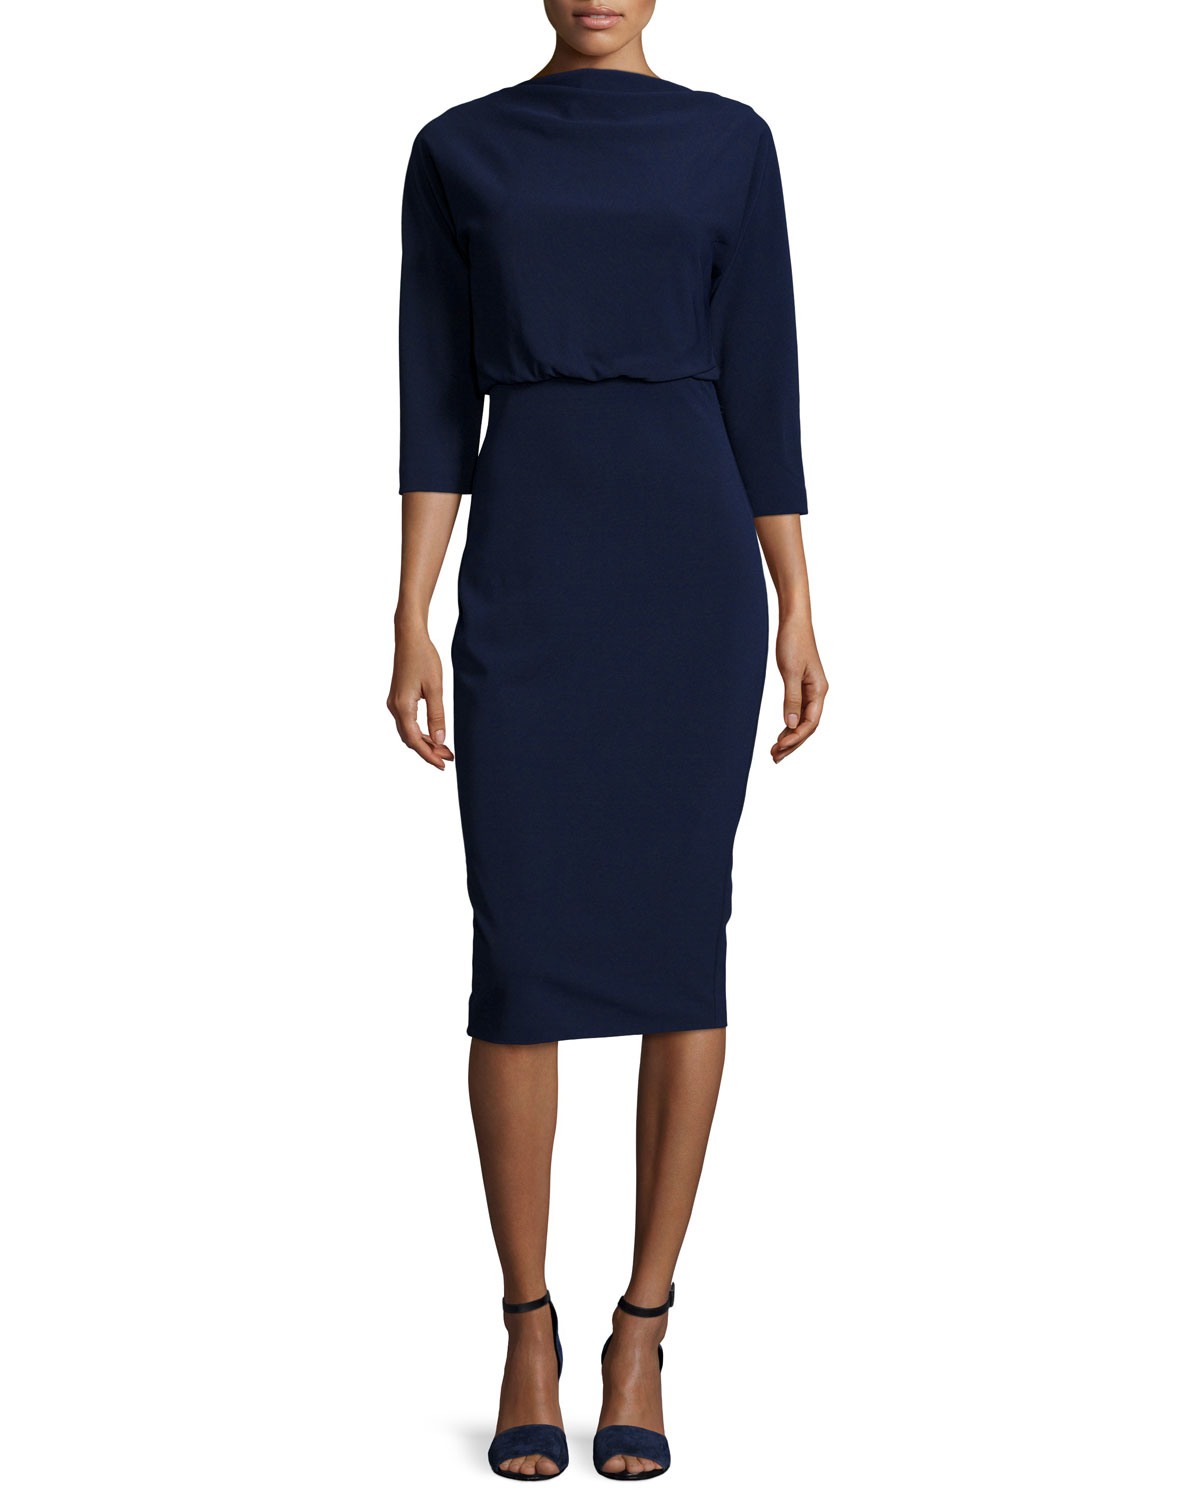 Lyst - Badgley Mischka 3/4-sleeve Blouson-top Day Dress in Blue